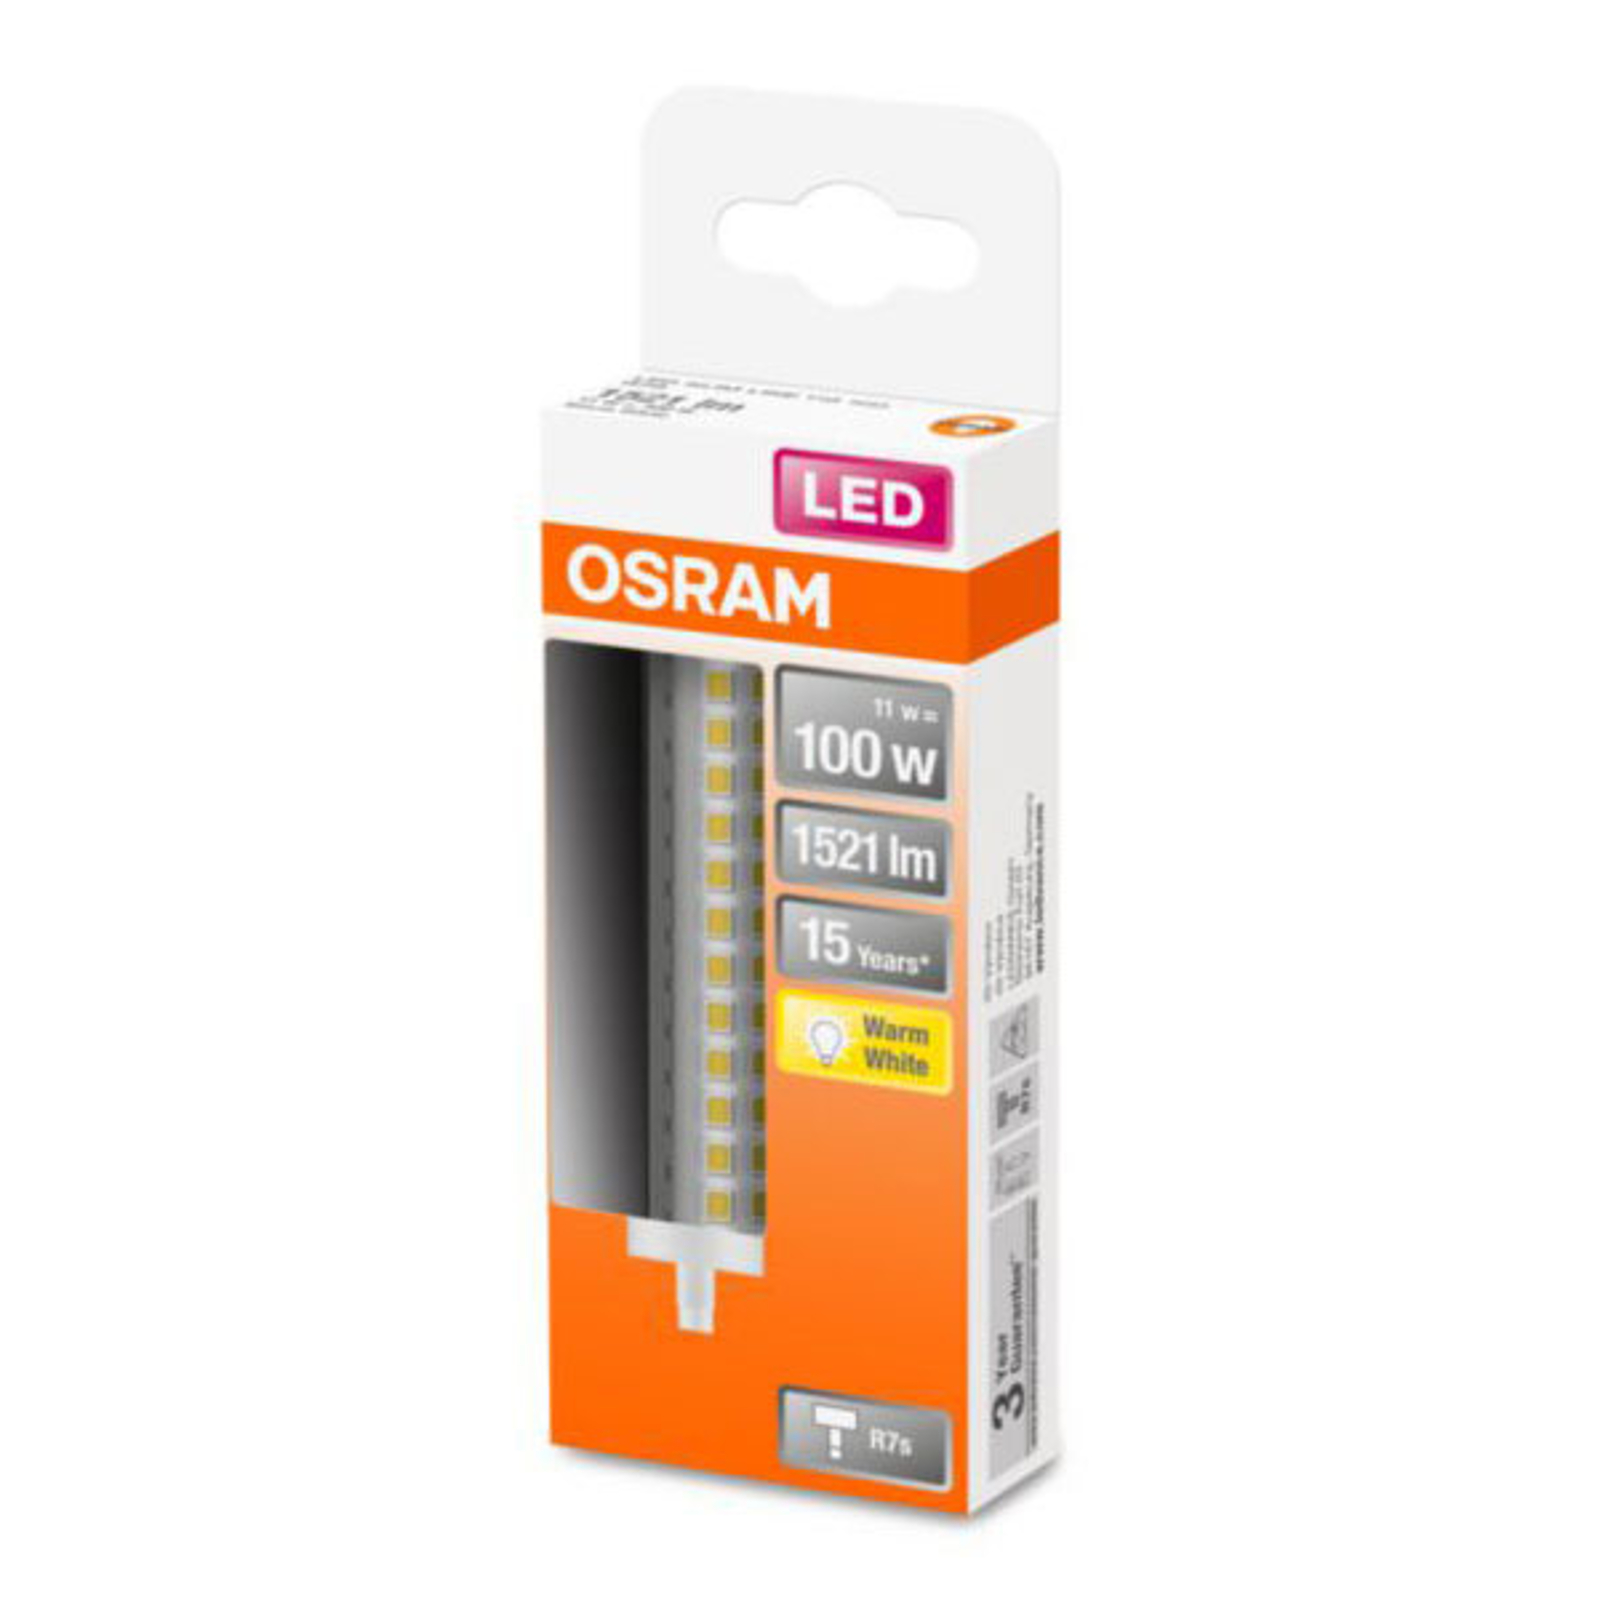 OSRAM-LED-lamppu R7s 11W 2 700 K